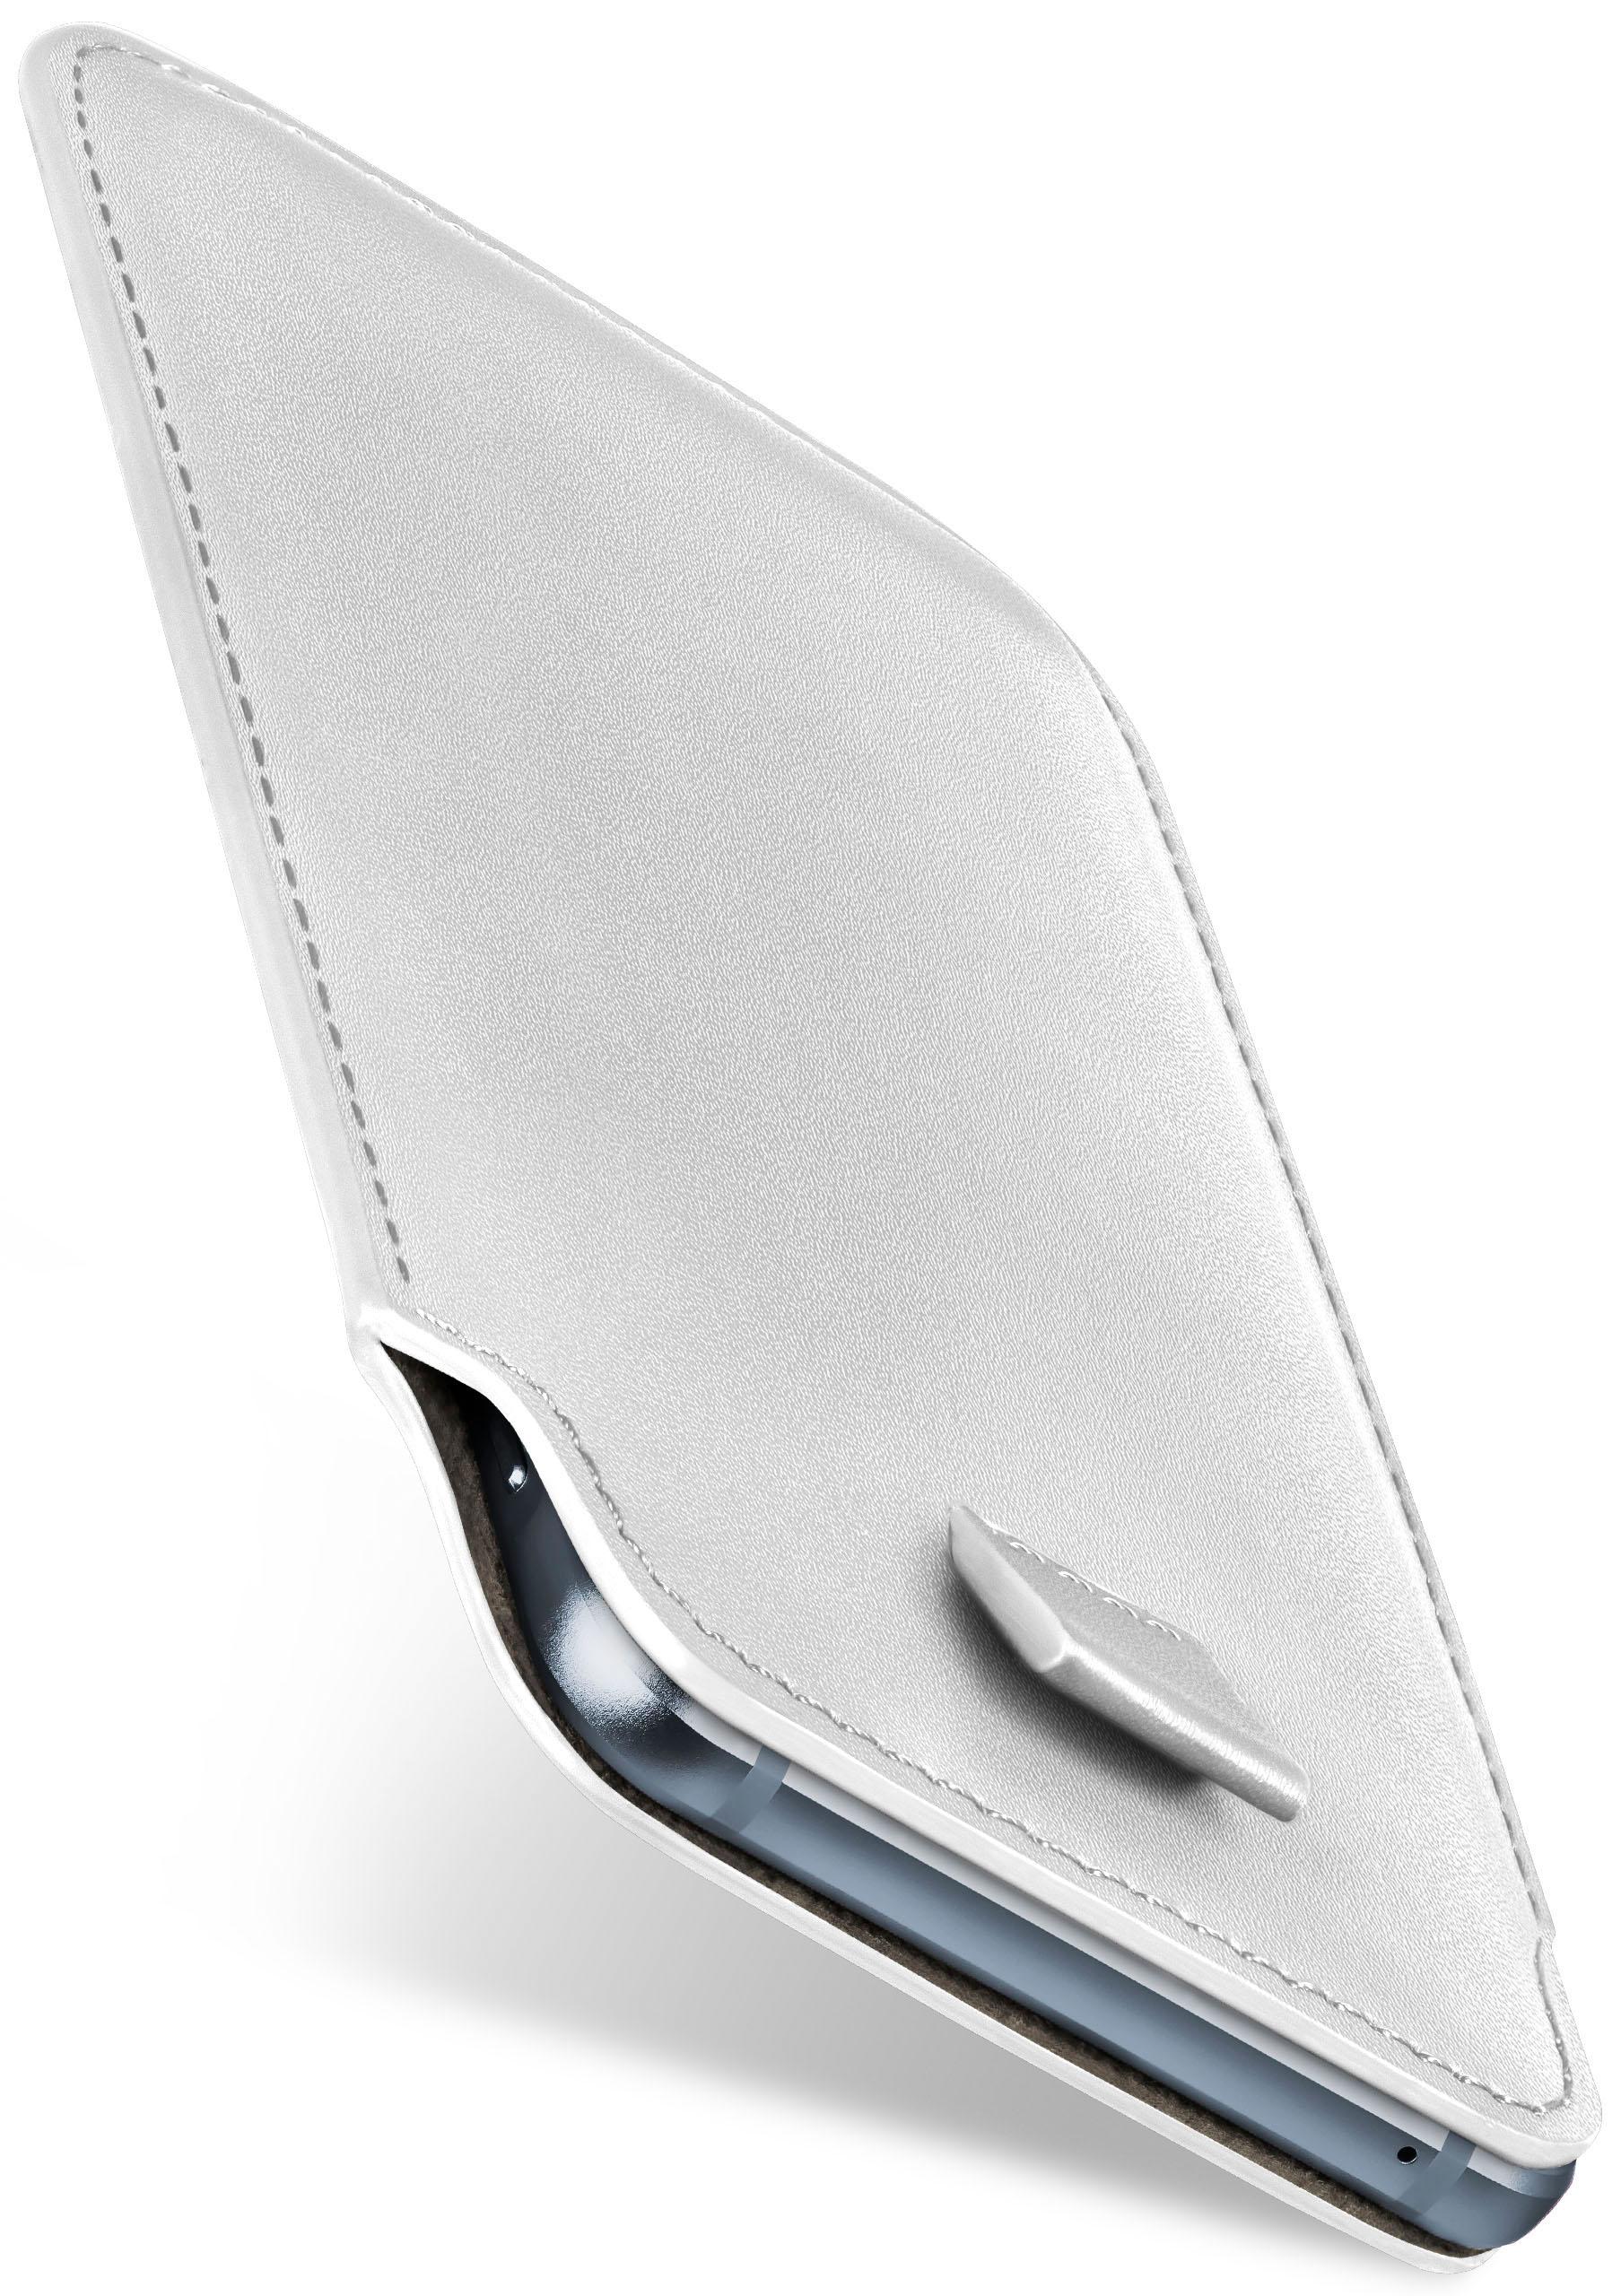 Aquaris MOEX Case, Shiny-White BQ, Slide Full X Cover, Pro,